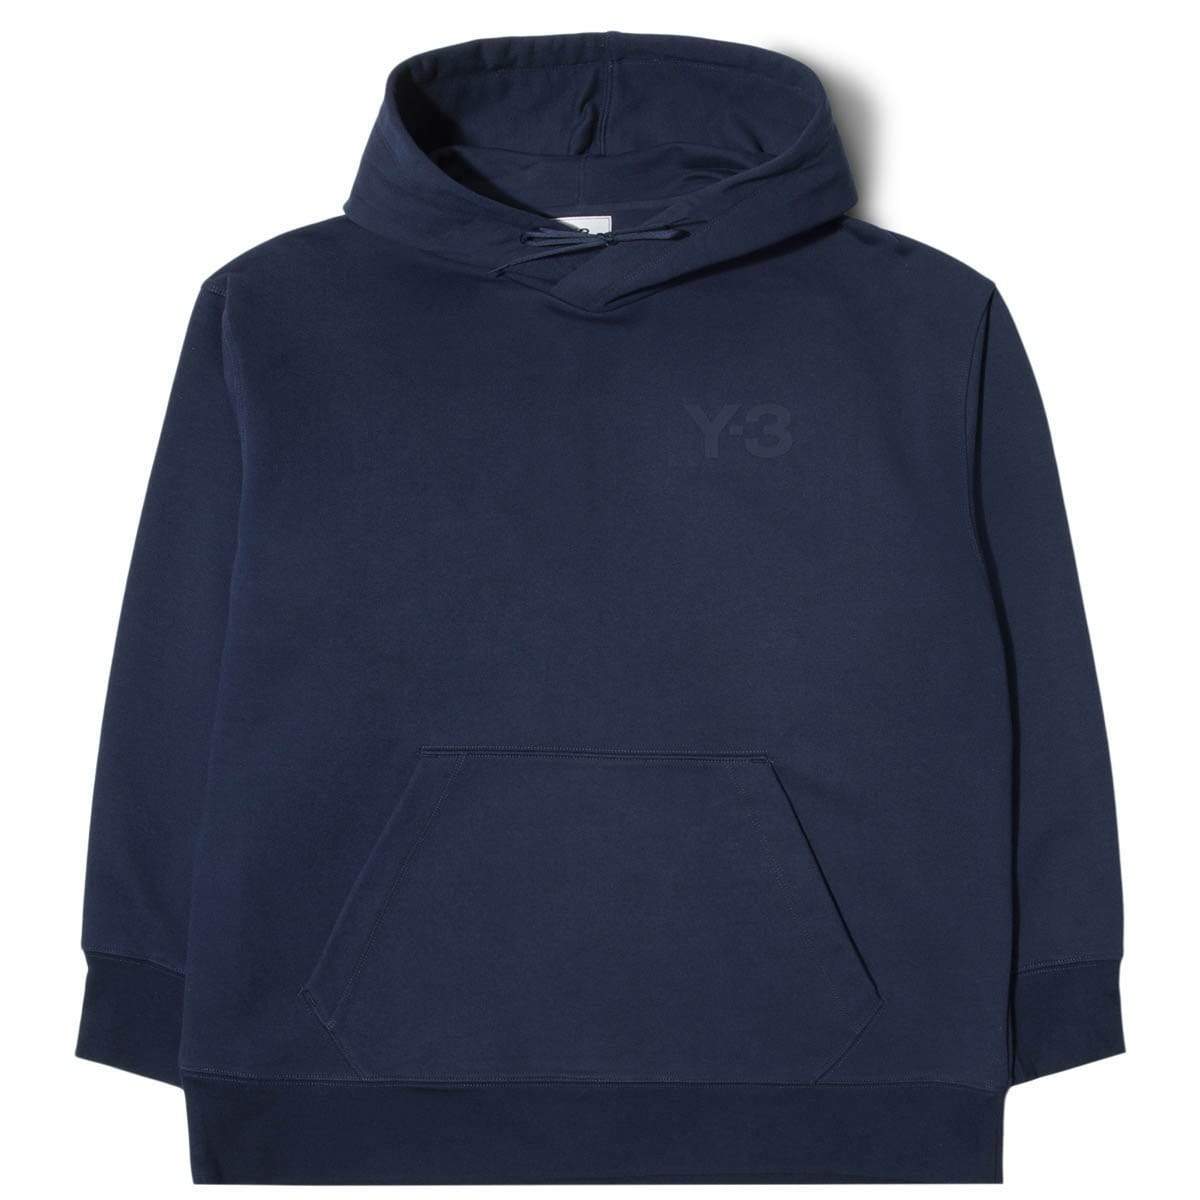 Adidas Y-3 Hoodies & Sweatshirts CLASSIC CHEST LOGO HOODIE